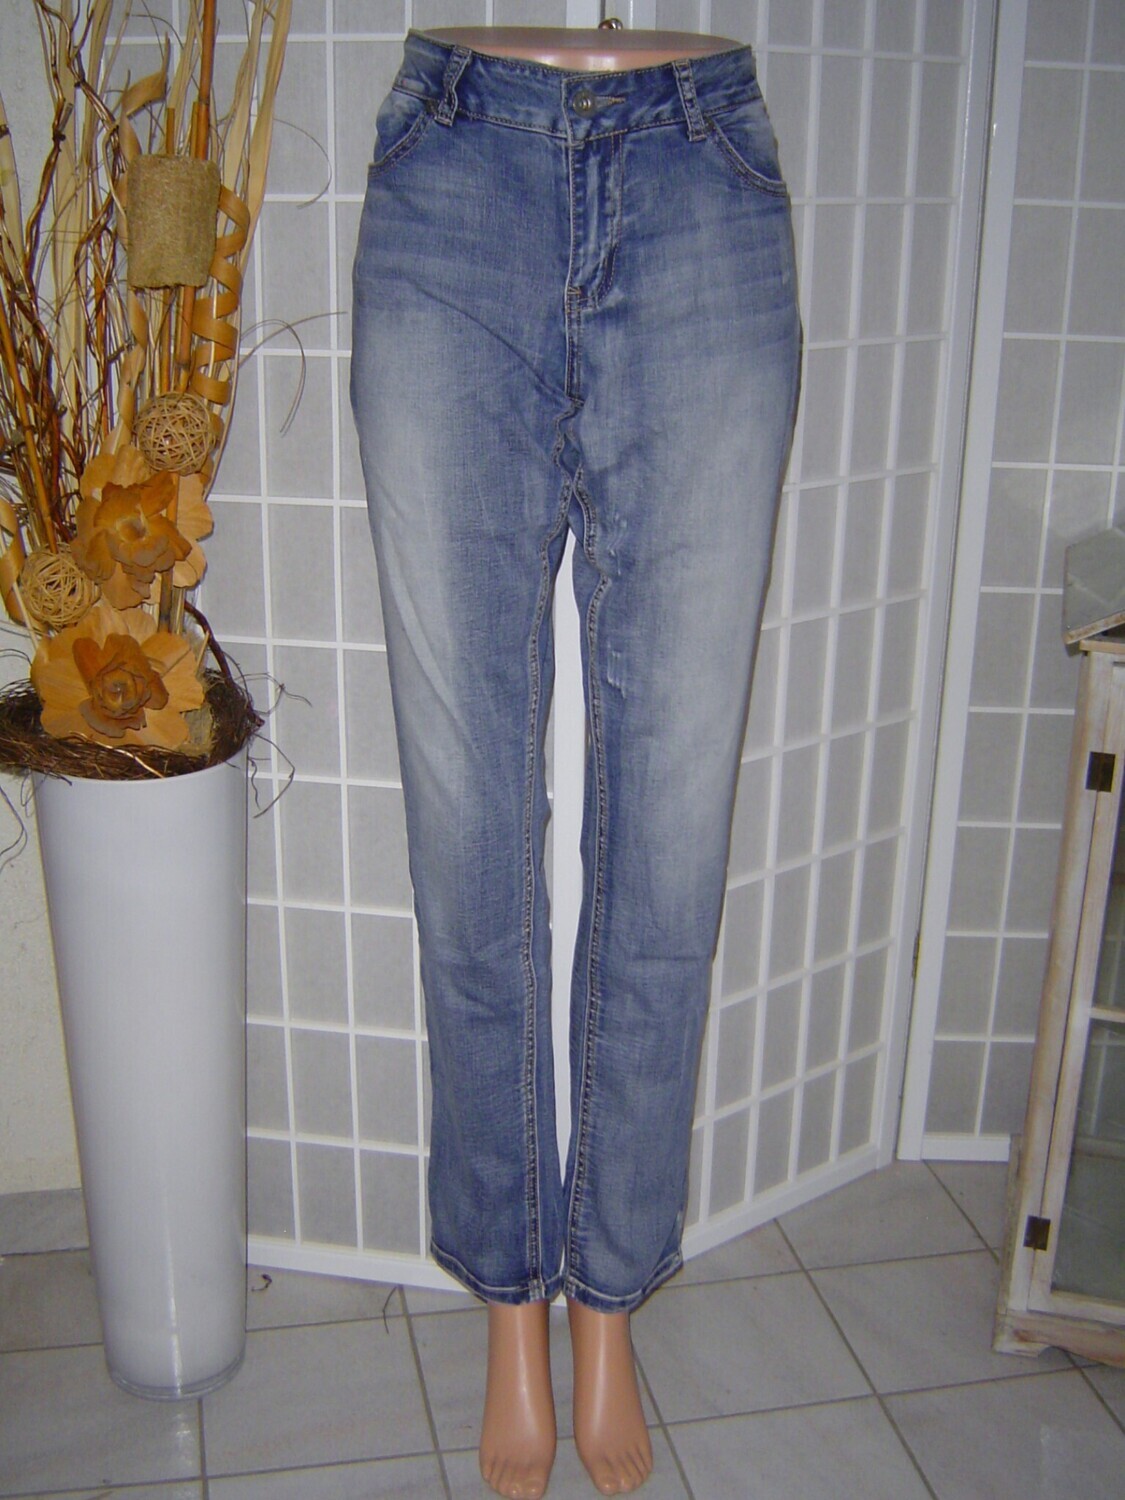 Opsommen Onderdrukker Verbinding verbroken Damen Jeans Hose Gr. 40 blau dünn skinny destroyed stretch